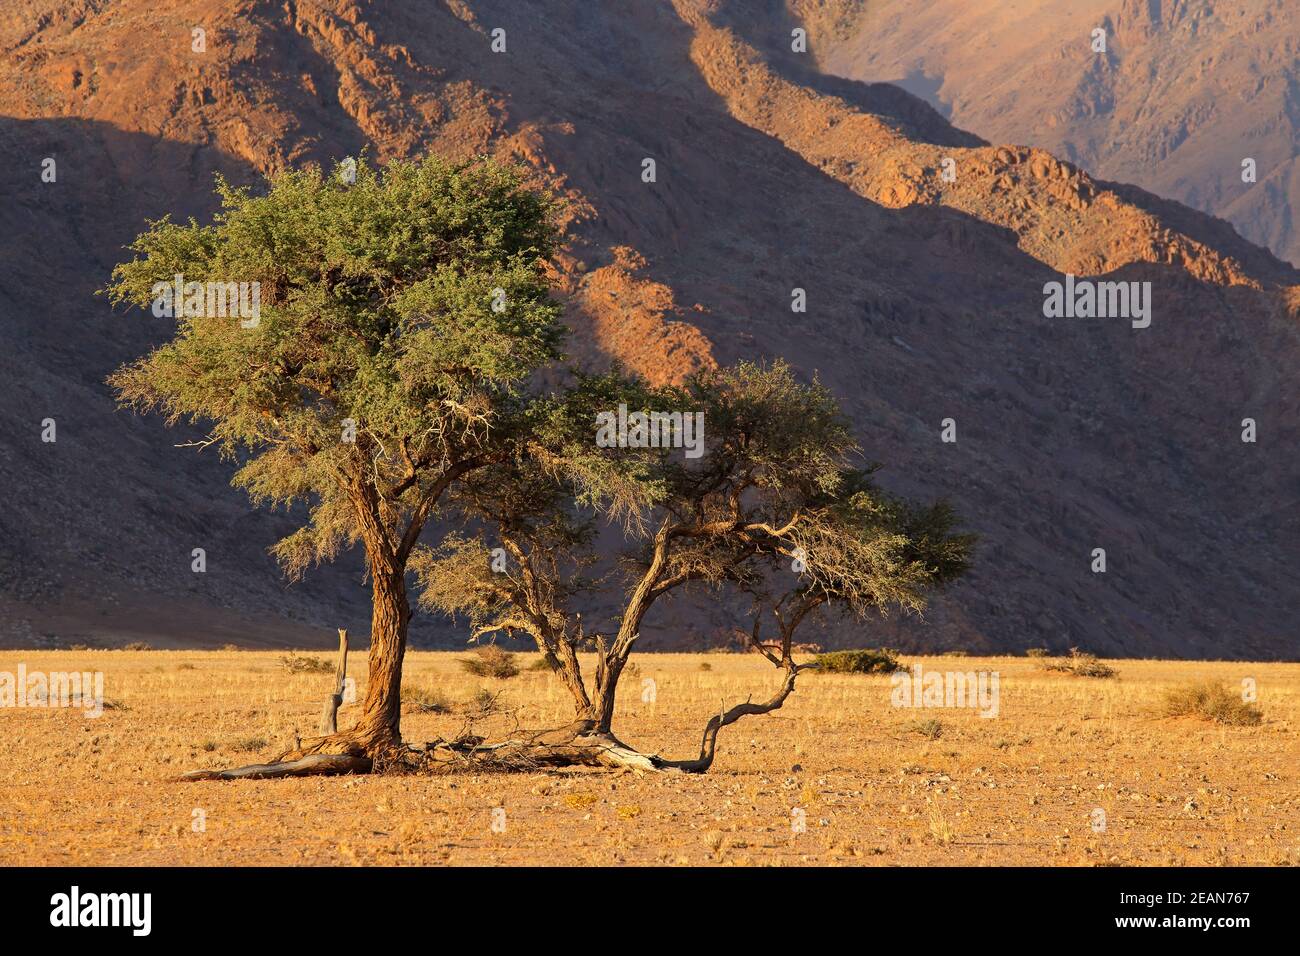 Namib desert landscape with thorn tree Stock Photo